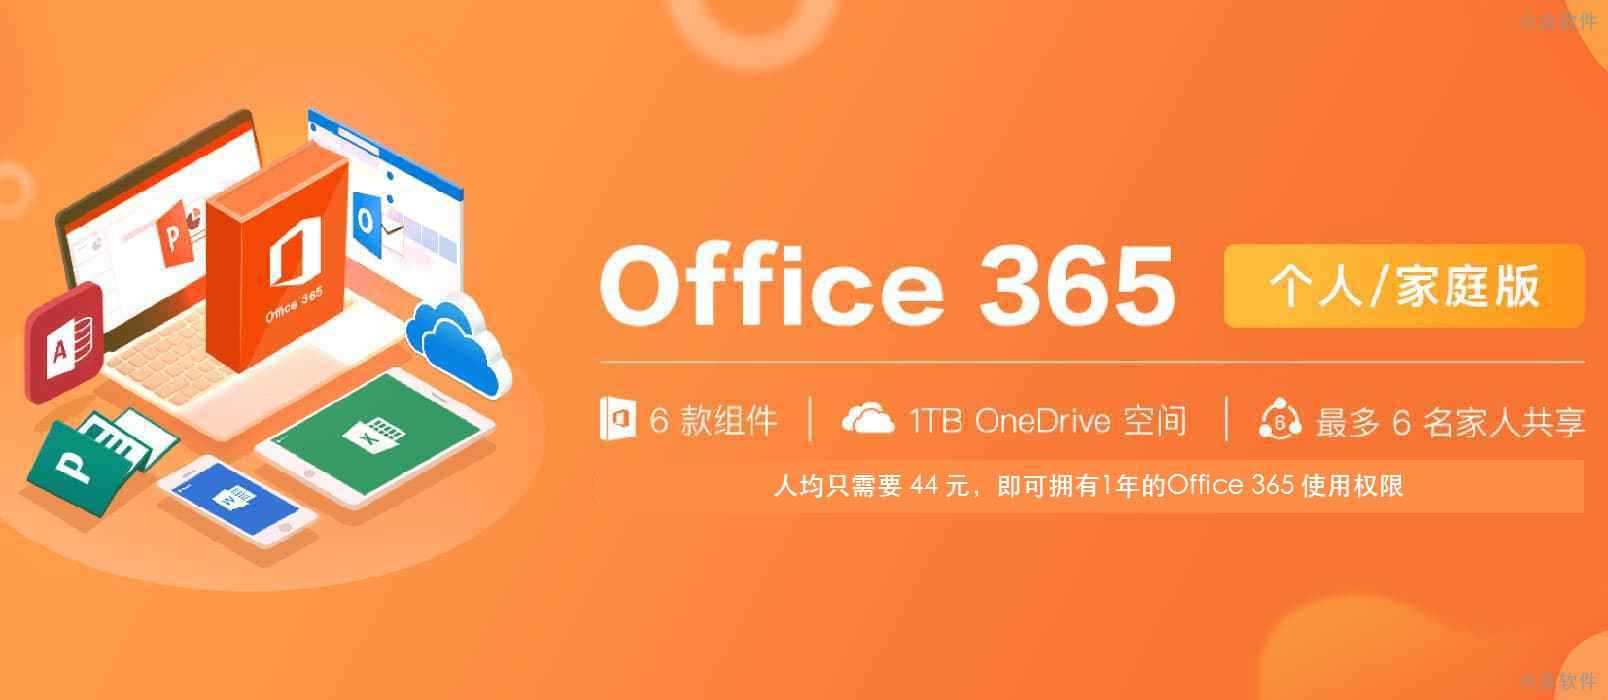 Office 365 家庭版又有优惠啦，价格探底